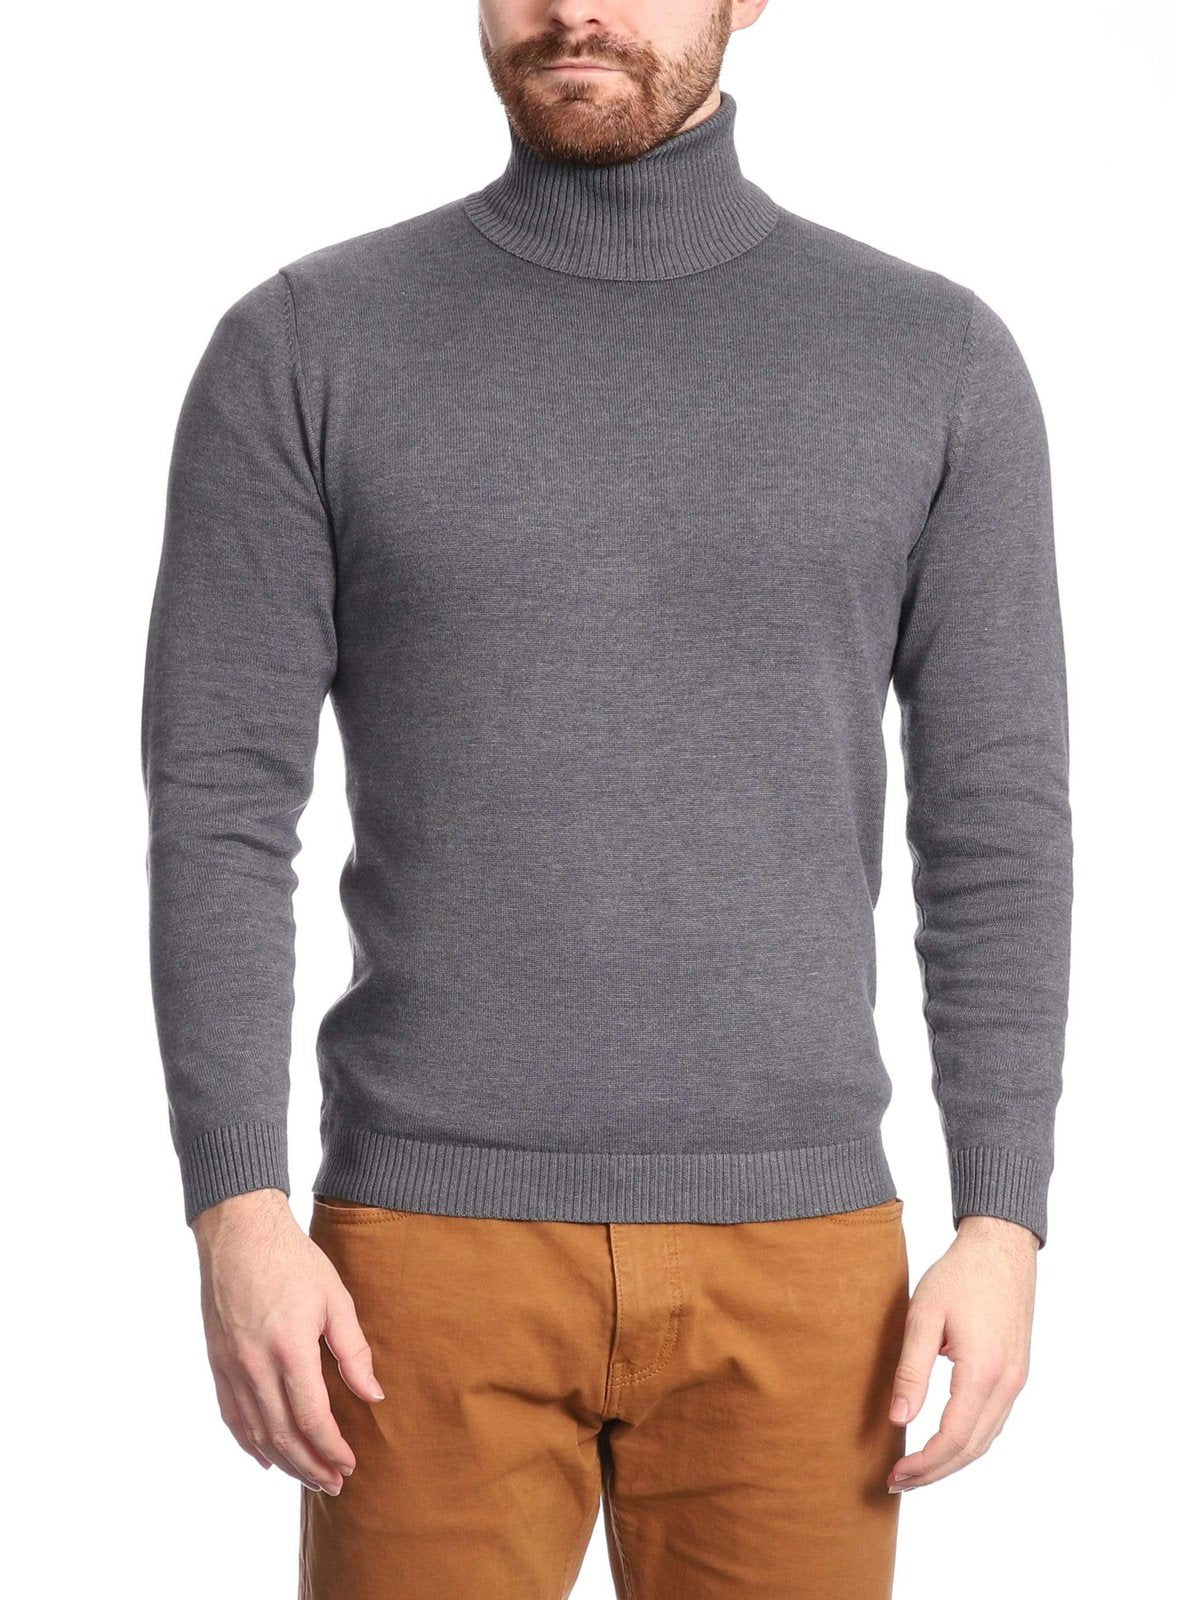 Arthur Black Default Category Migrated Gray / 3XL Arthur Black Men's Solid Gray Pullover Cotton Blend Turtleneck Sweater Shirt